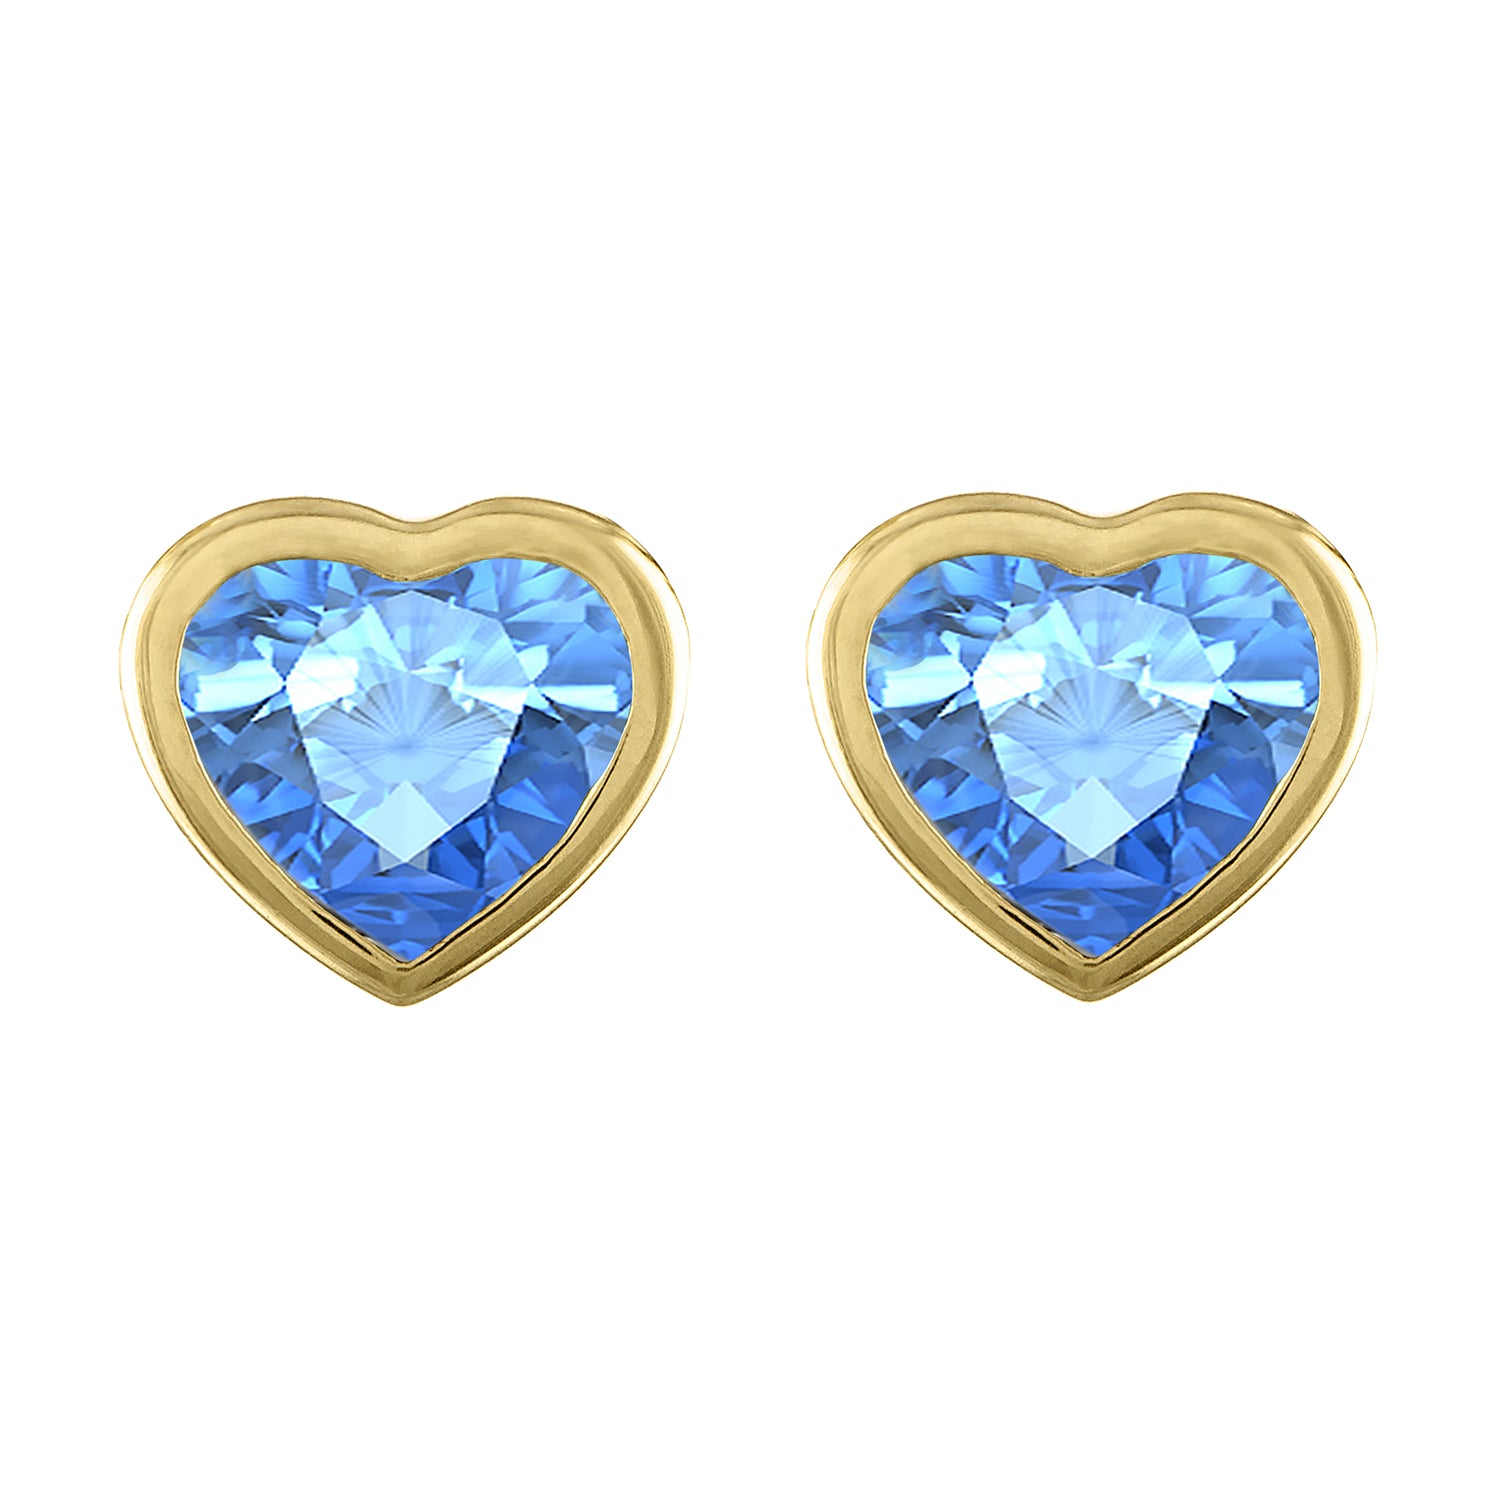 Yellow gold pair of heart shaped bezeled blue topaz earrings.